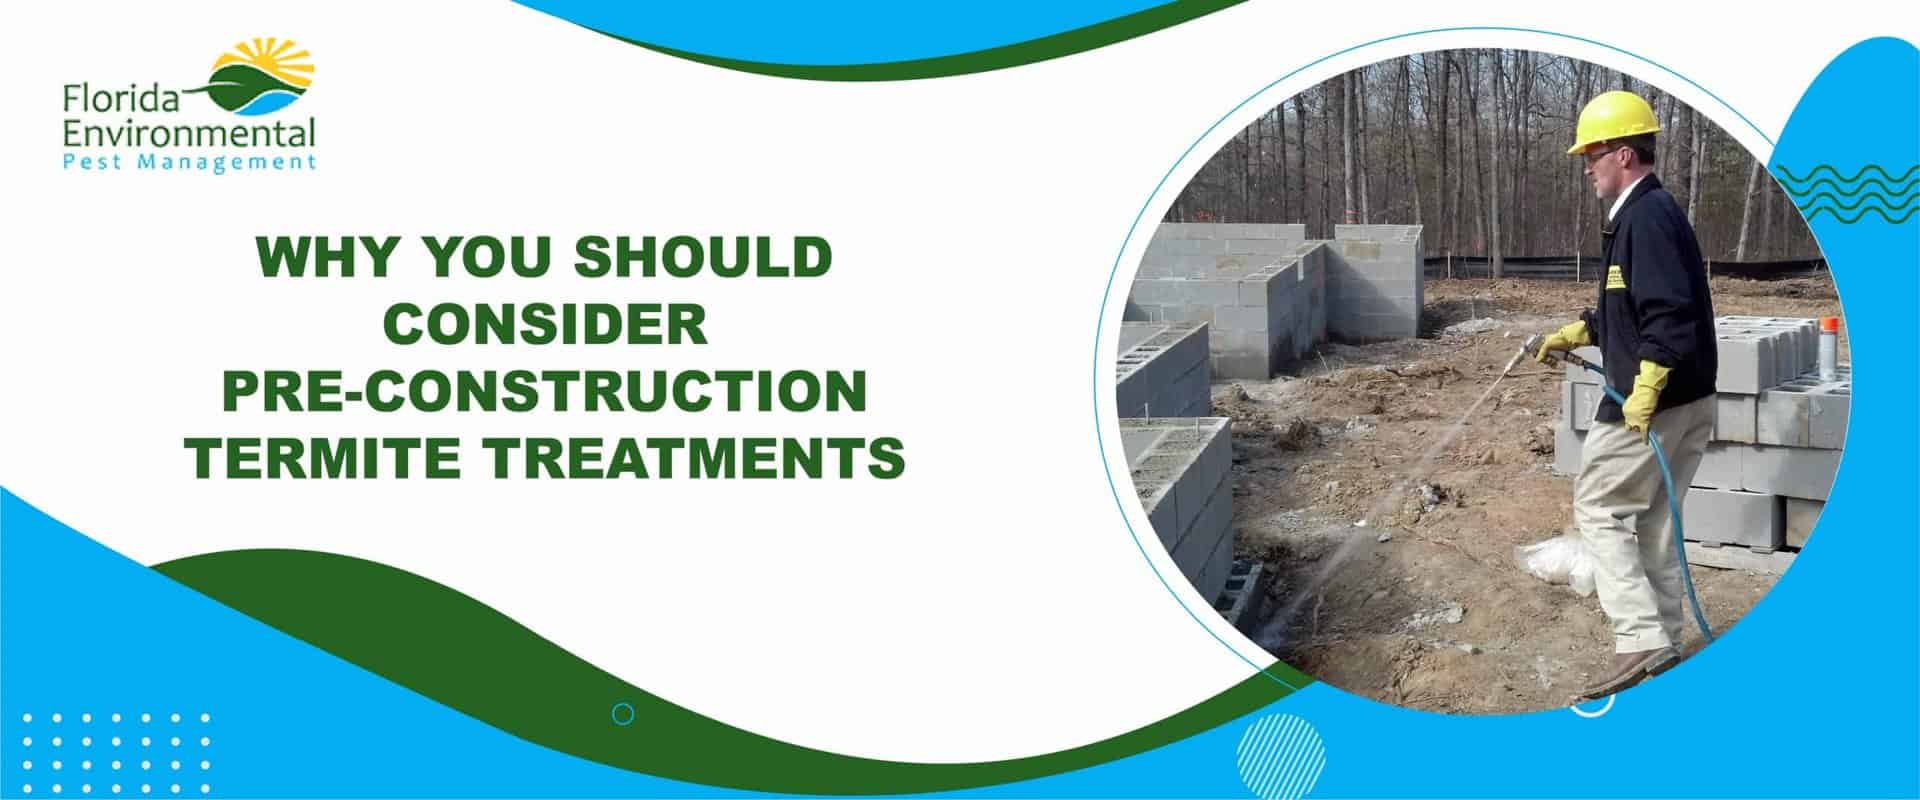 benefits of pre-construction termite treatments